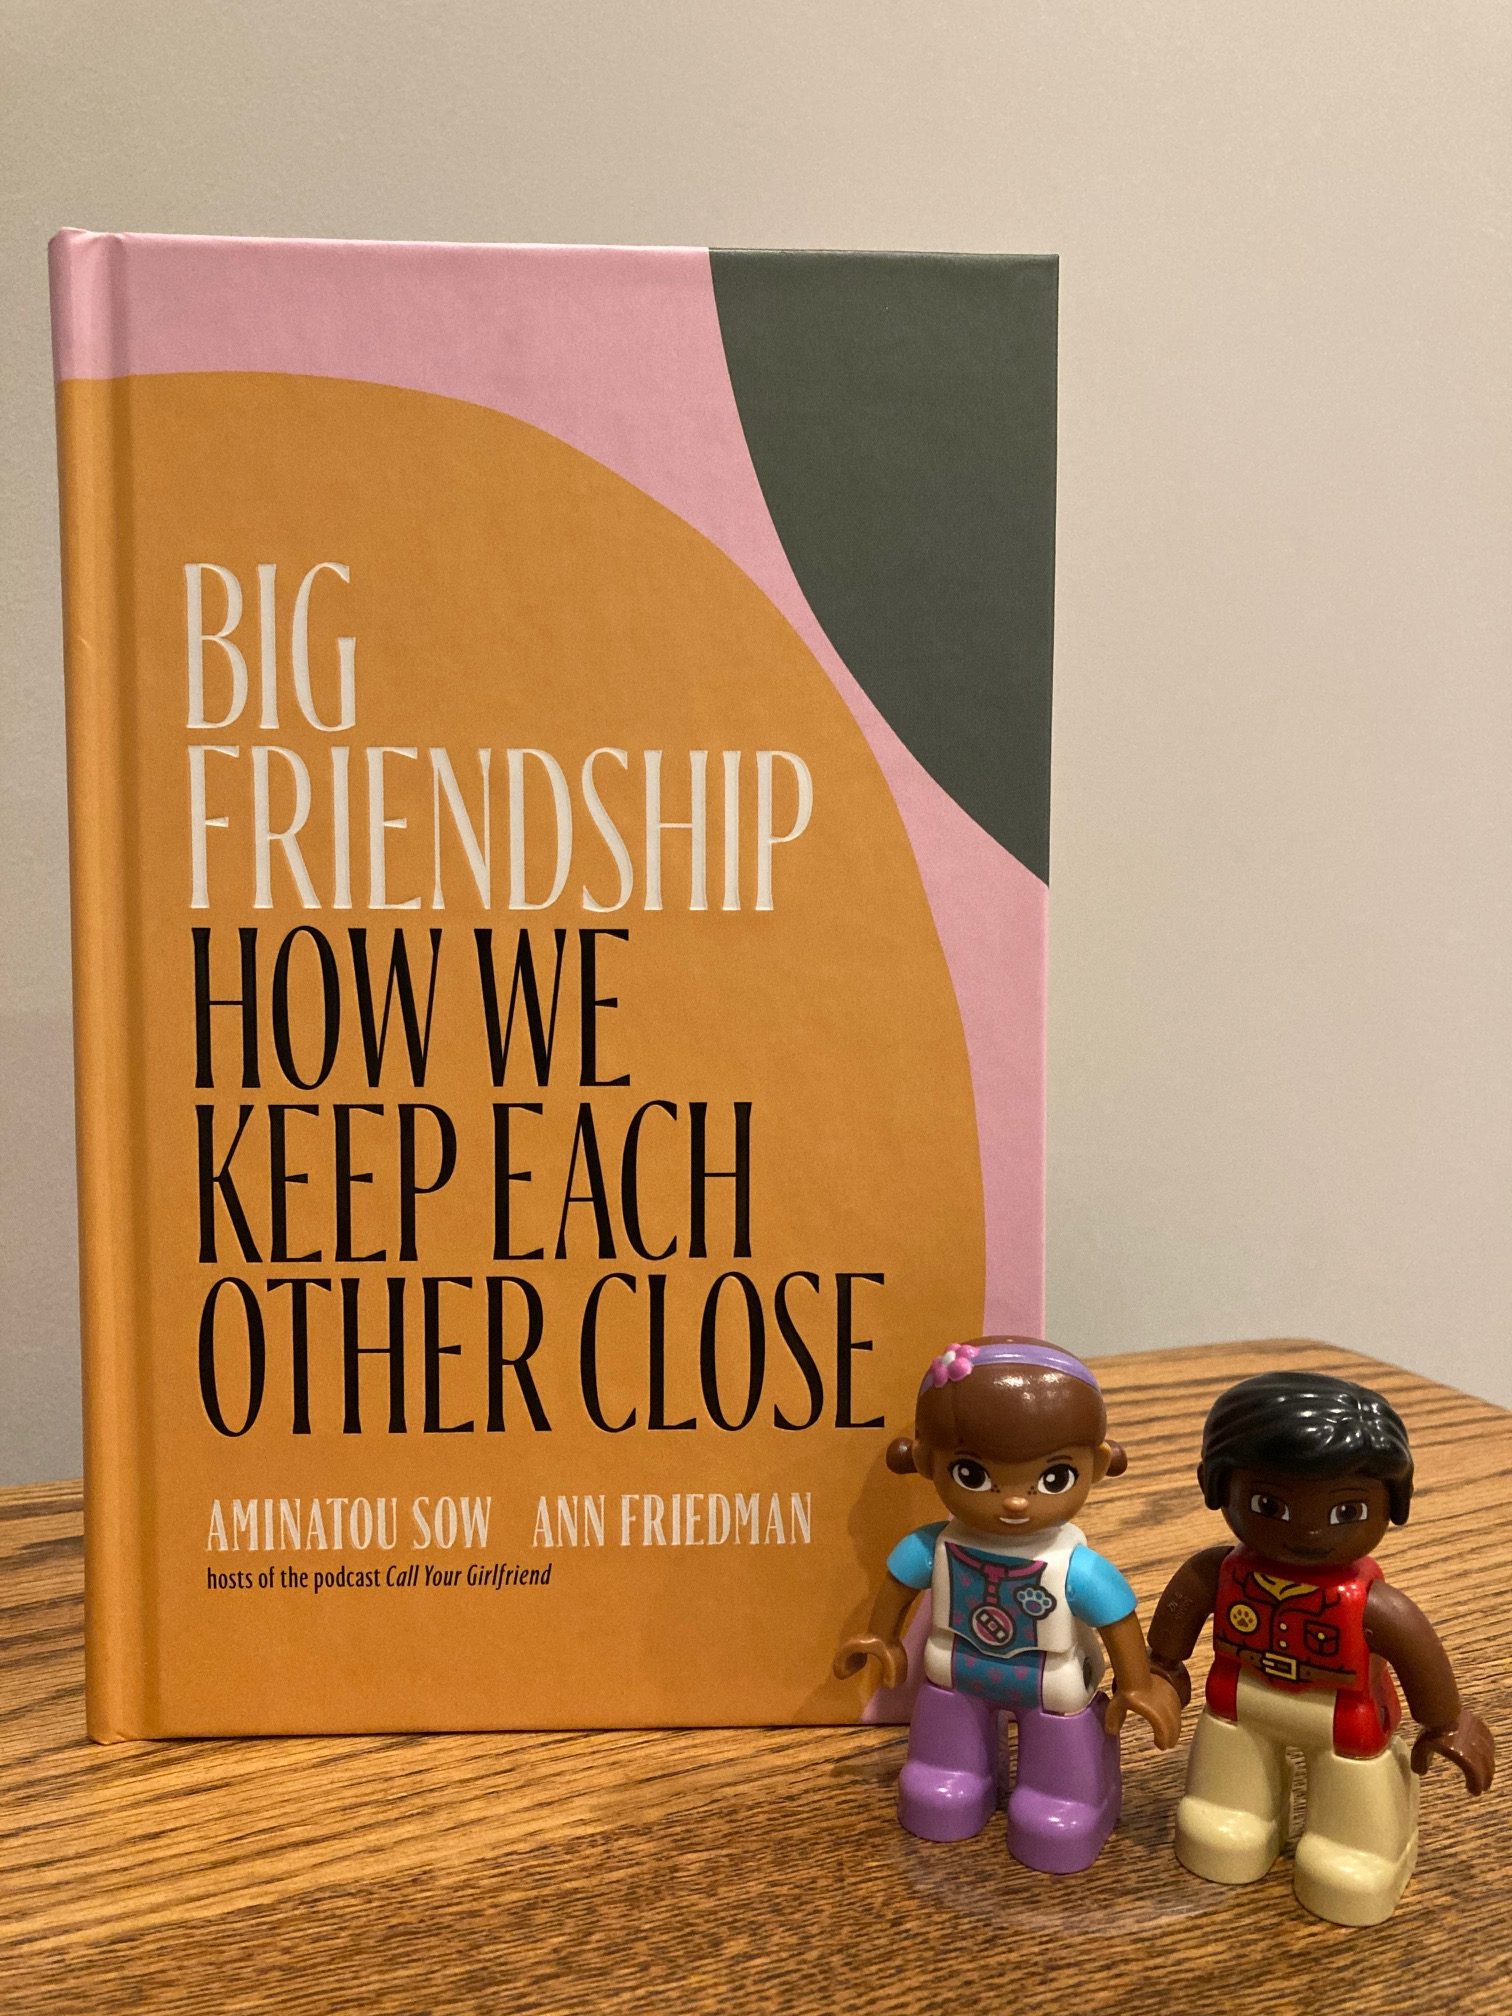 Big Friendship by Aminatou Sow and Ann Friedman